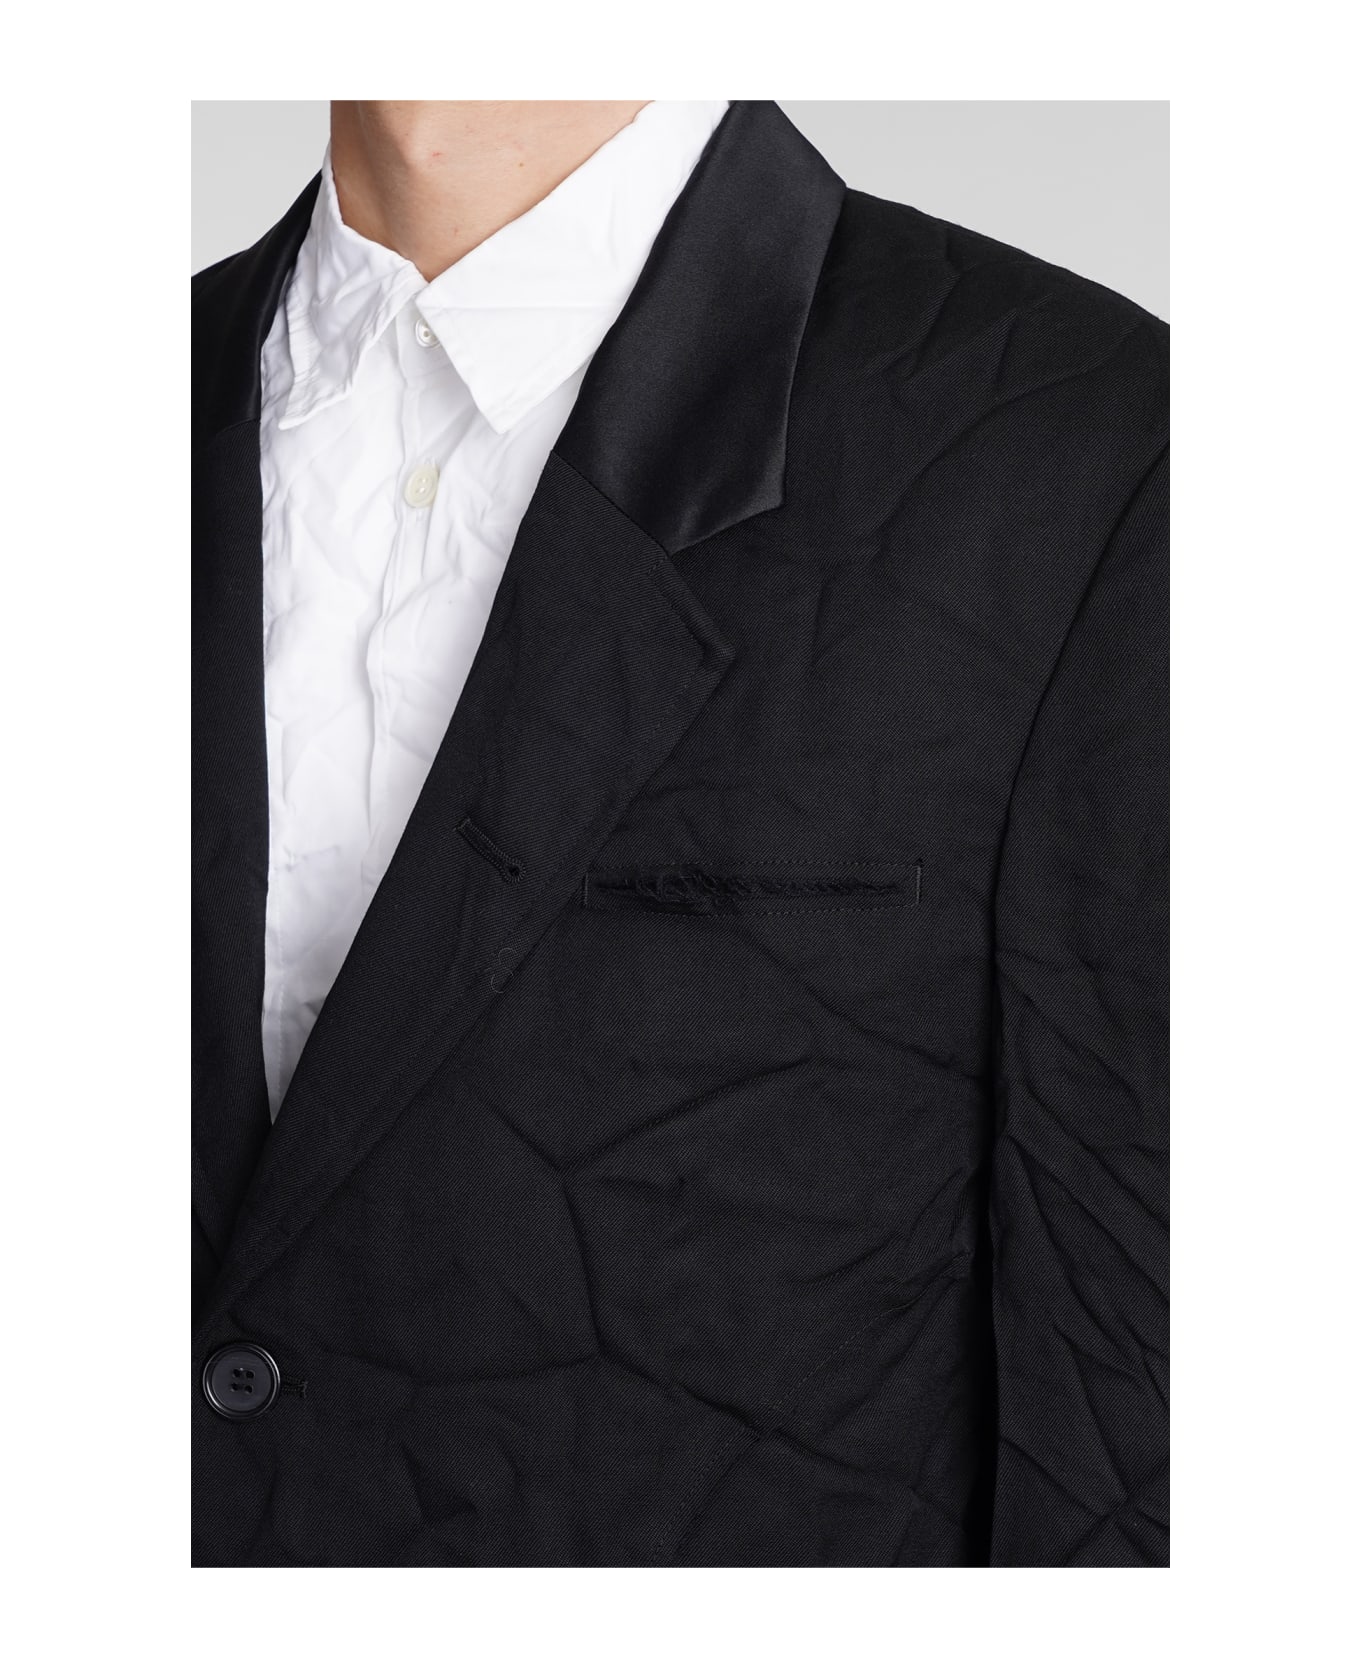 Undercover Jun Takahashi Blazer In Black Wool - black